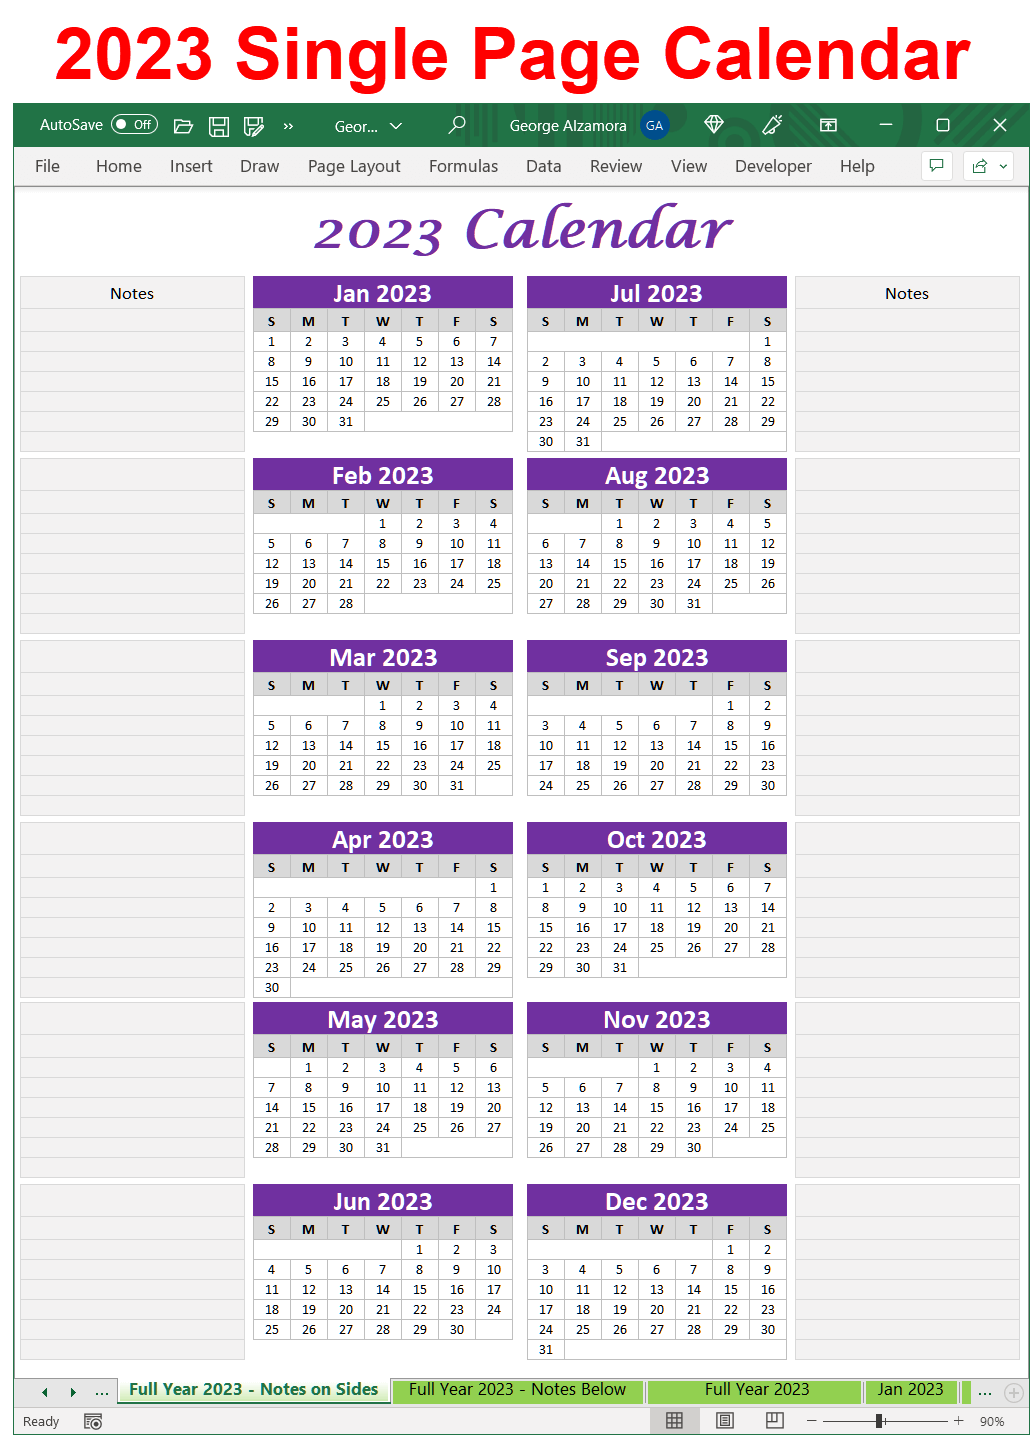 2023 Single Page Calendar Spreadsheet